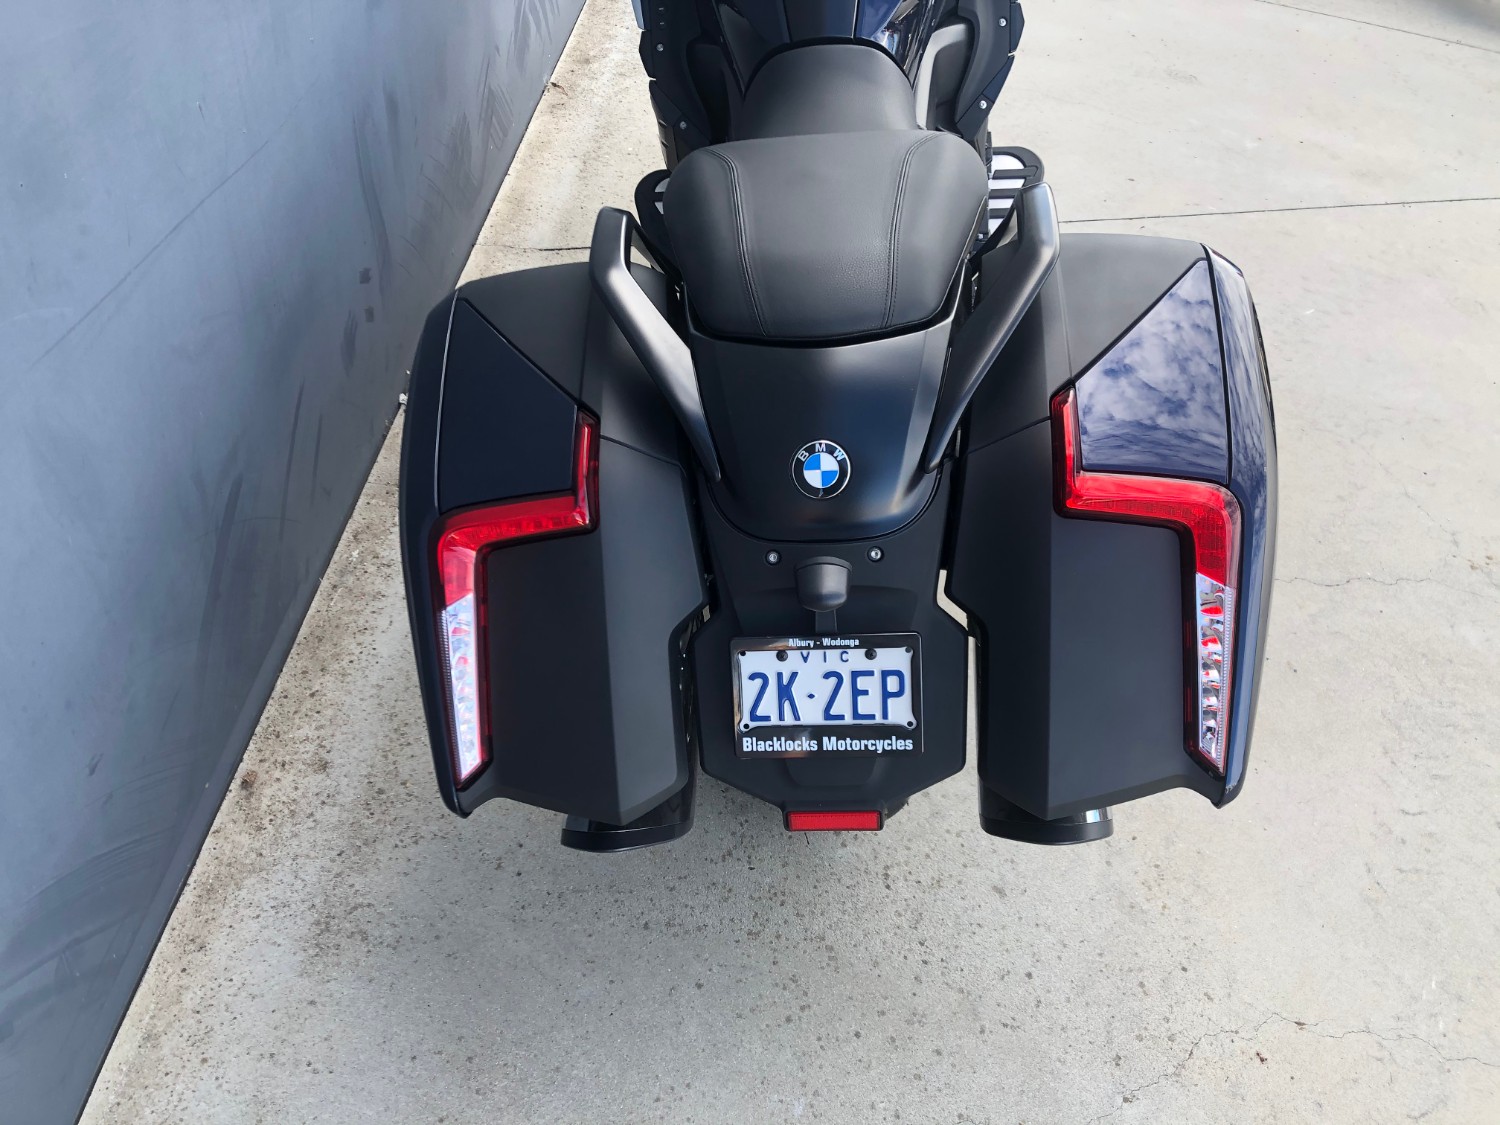 2019 BMW K1600 B Deluxe Motorcycle Image 16